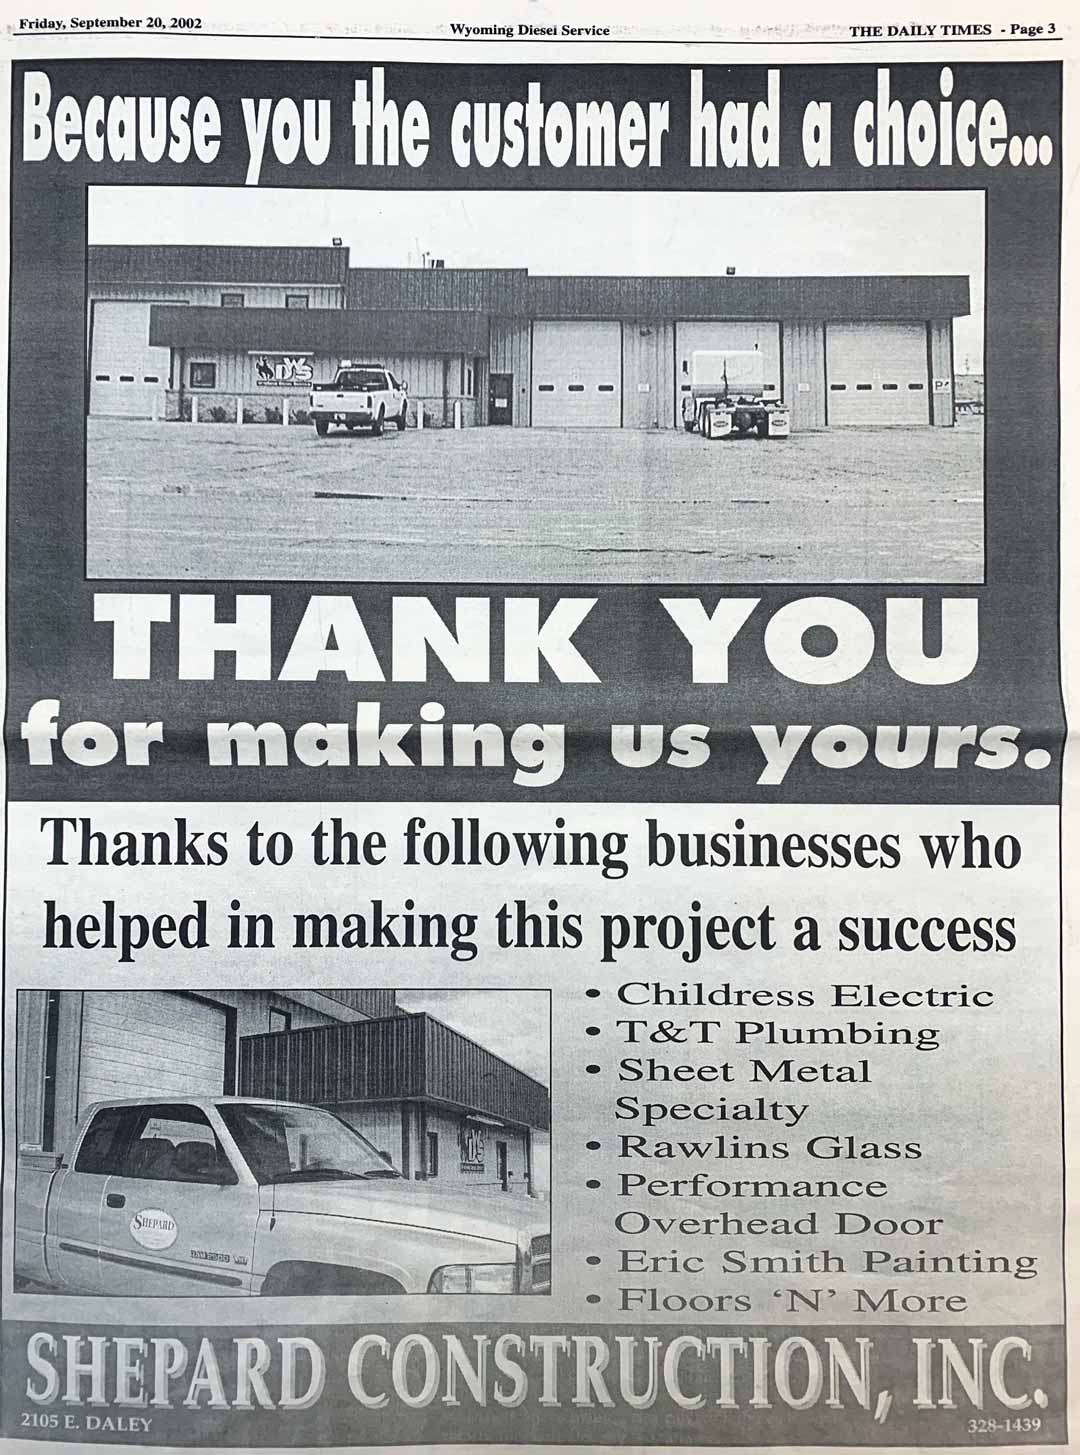 Newspaper cutout thanking Shepard Construction